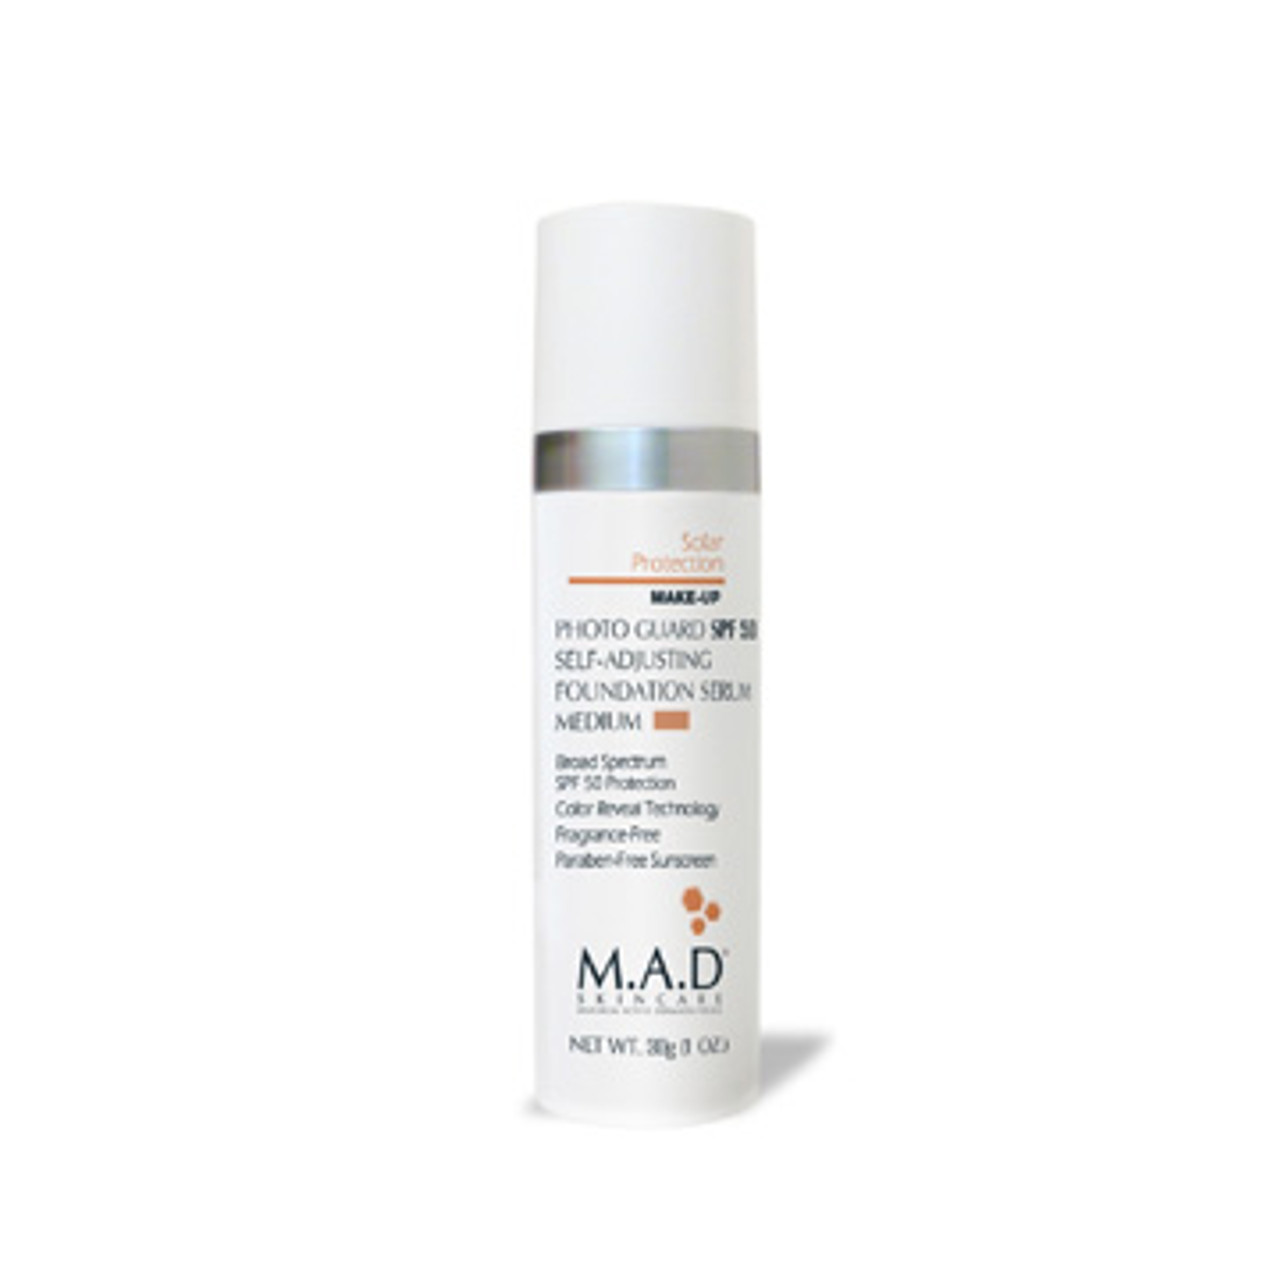 M.A.D Skincare Photo Guard SPF 50 Self-Adjusting Foundation Serum - 1 oz - Medium (800113)